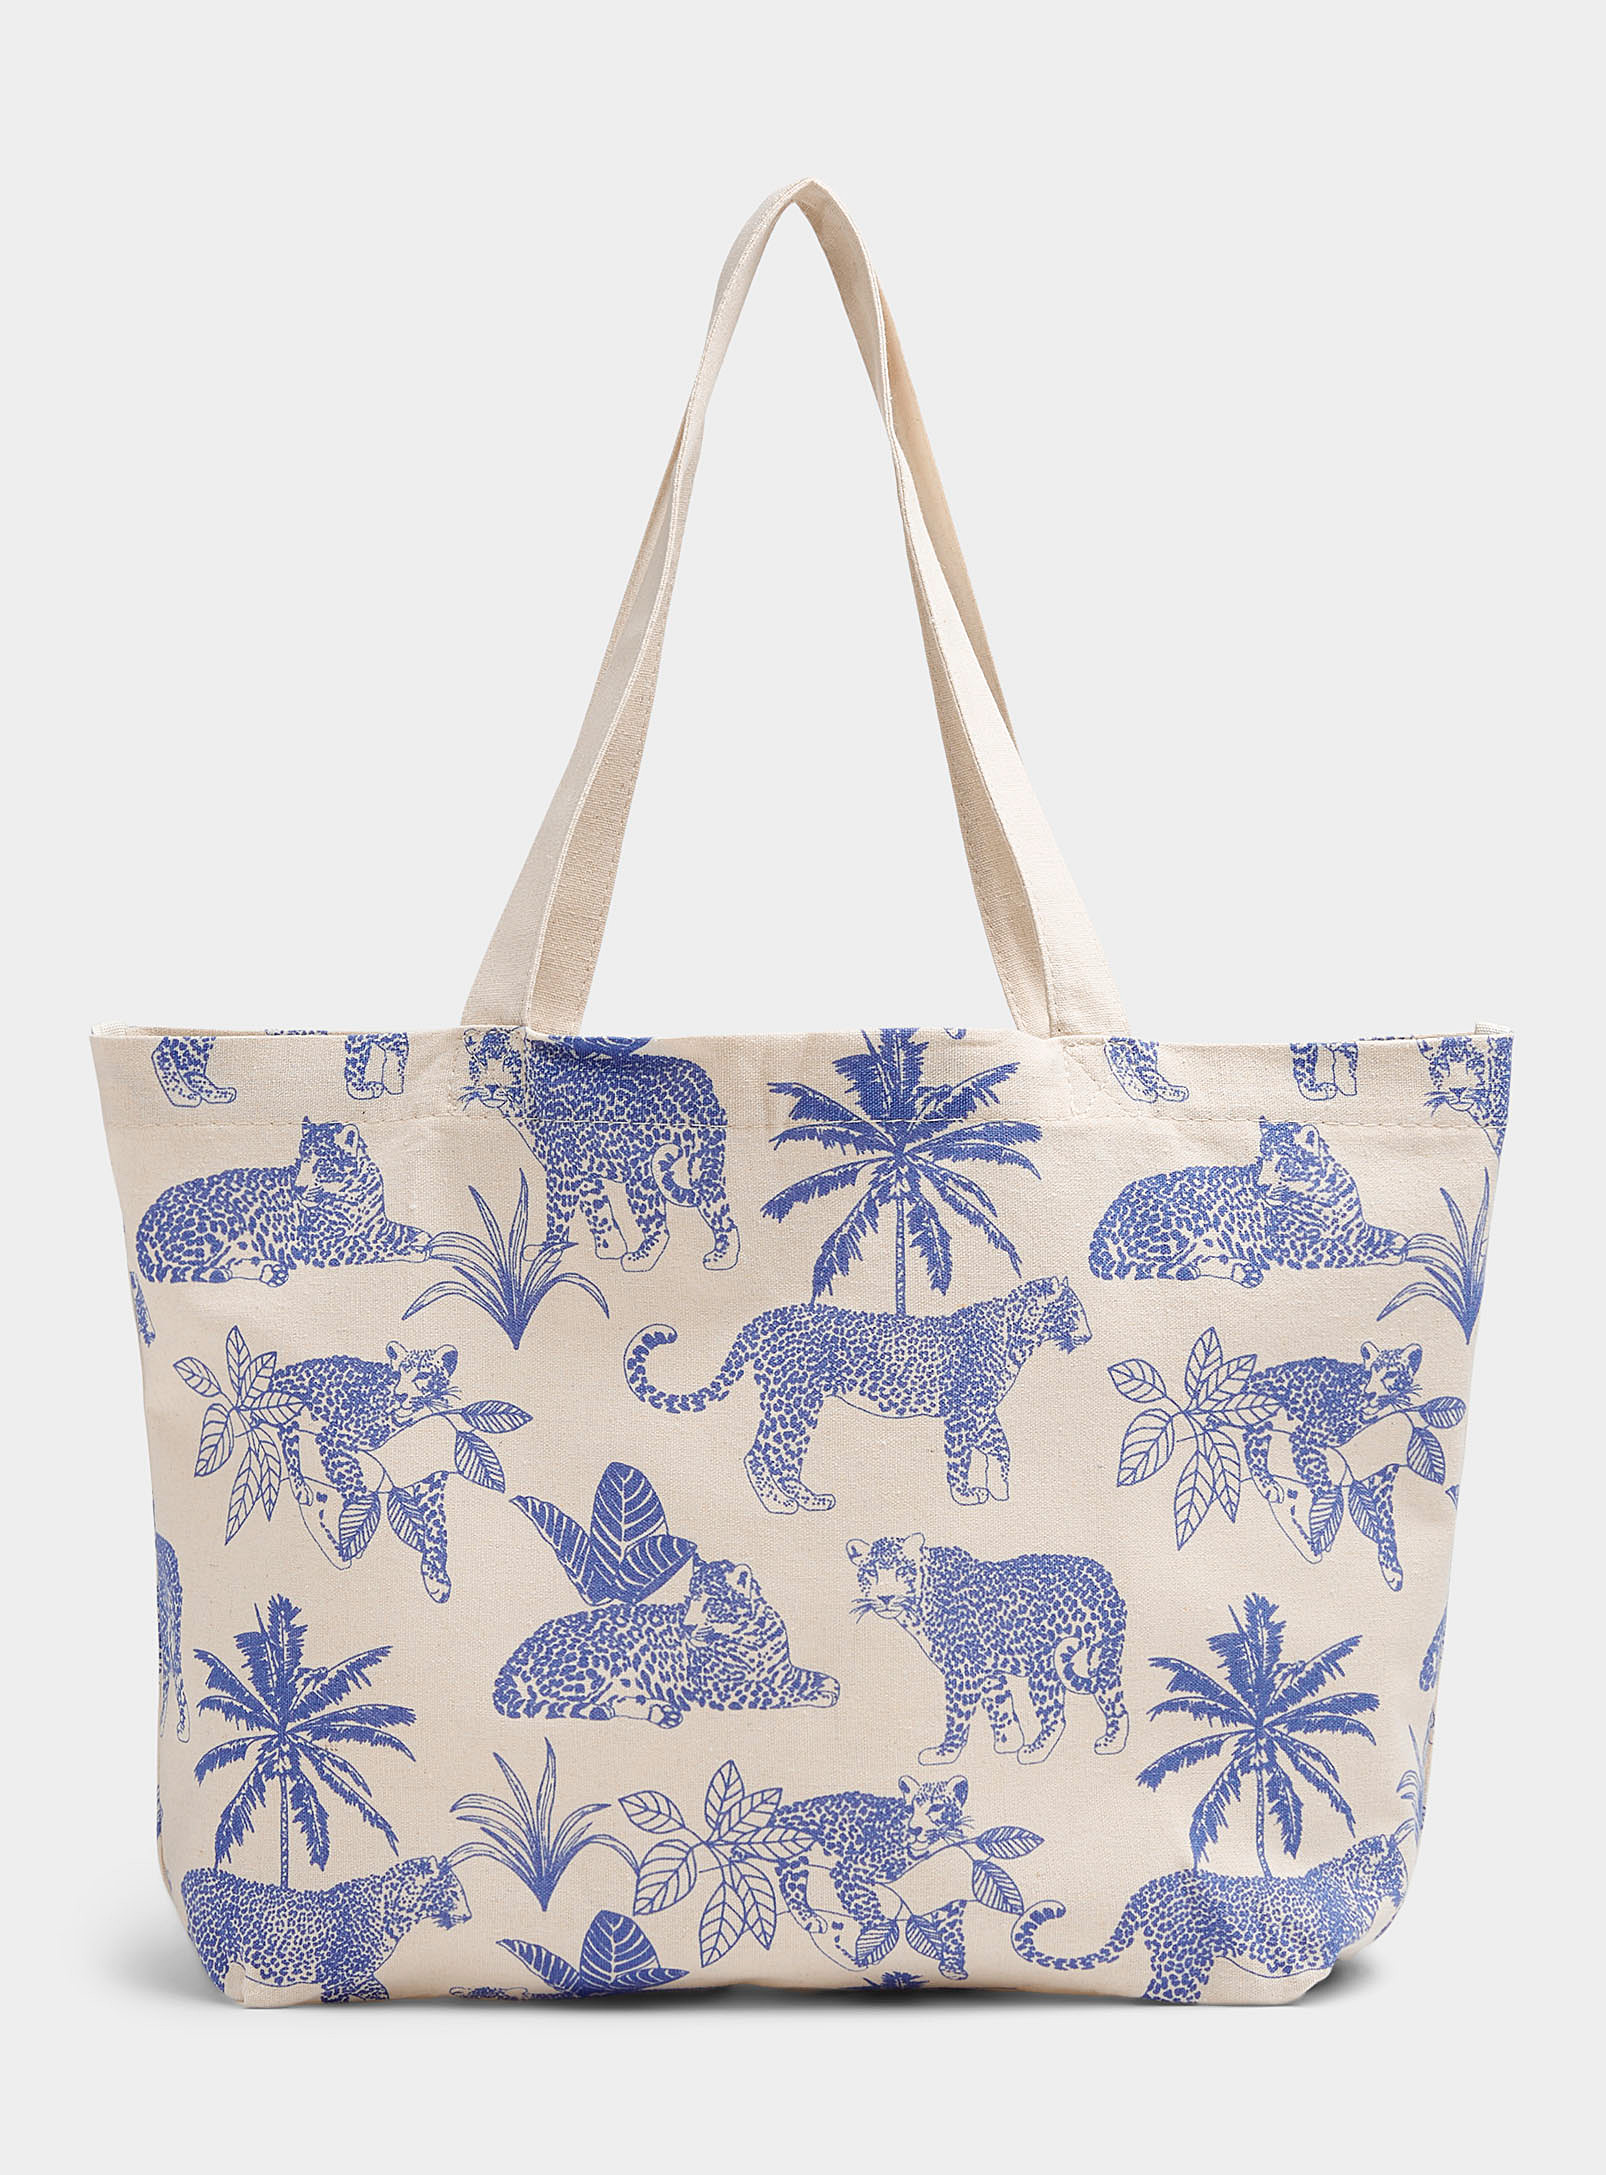 Simons - Women's Tropical savannah Tote Bag